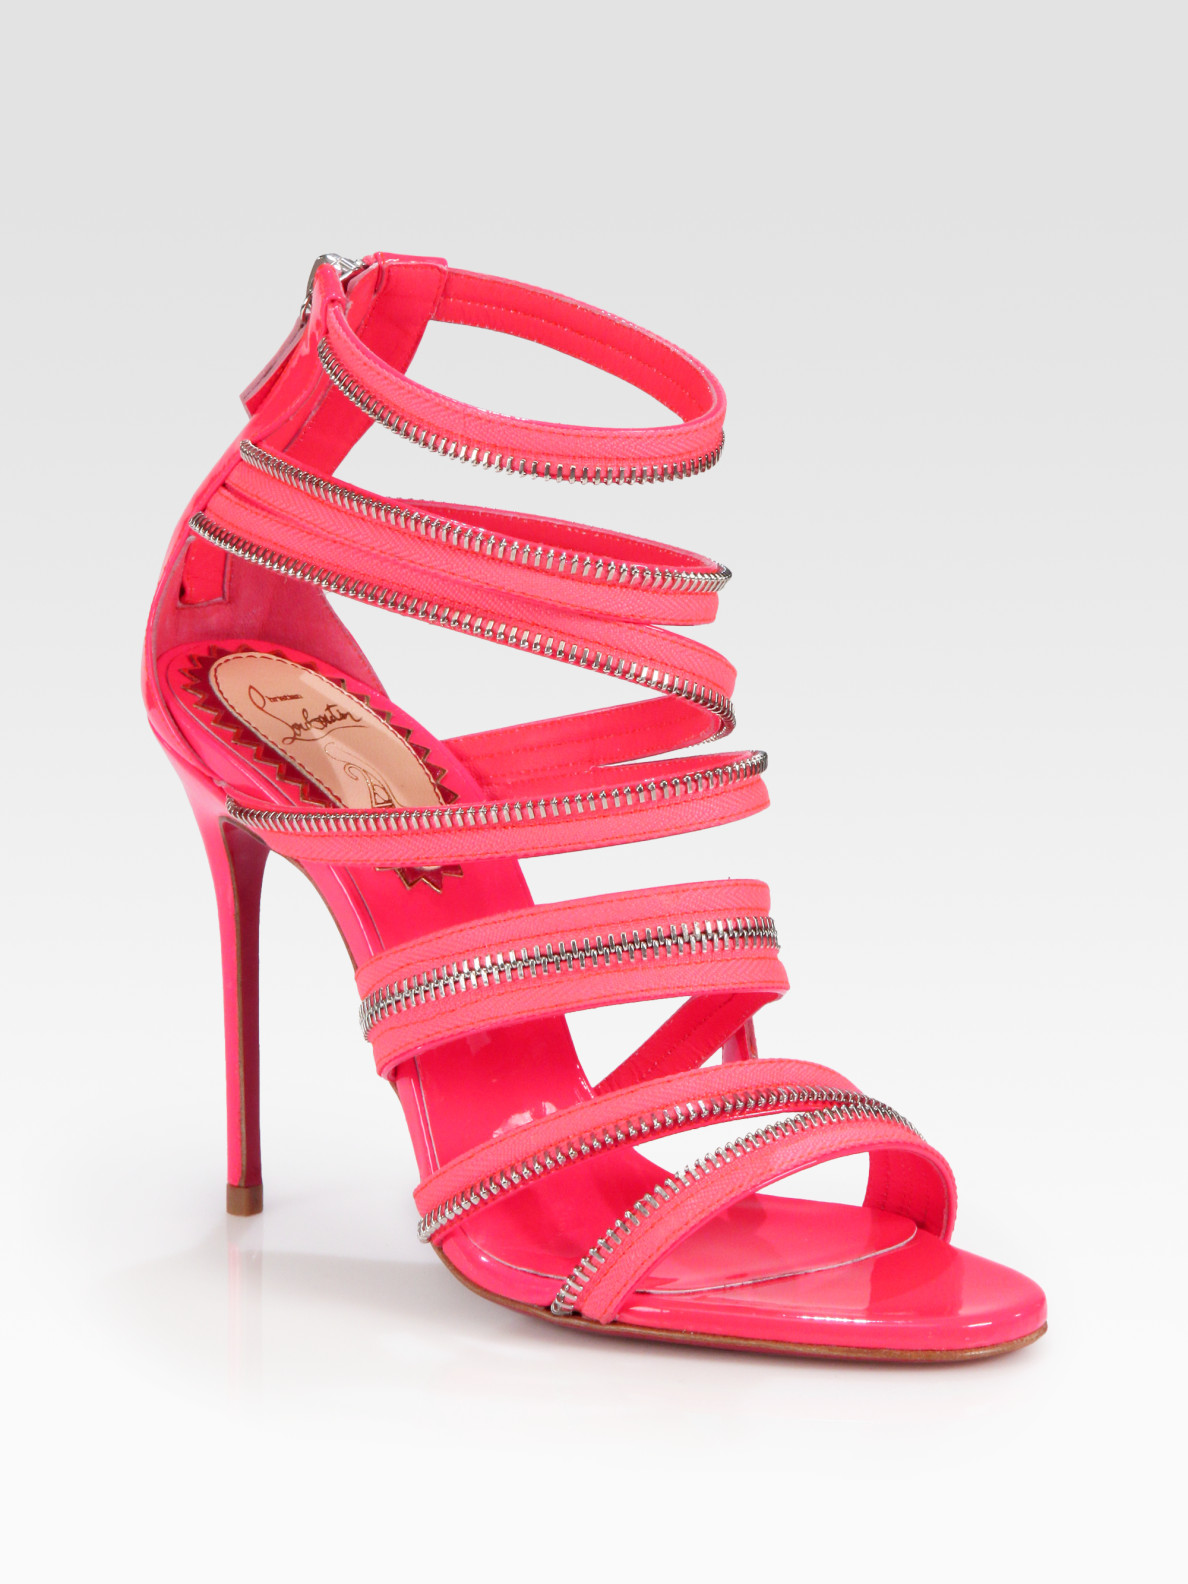 Artesur ? christian louboutin sandals Pink patent leather  